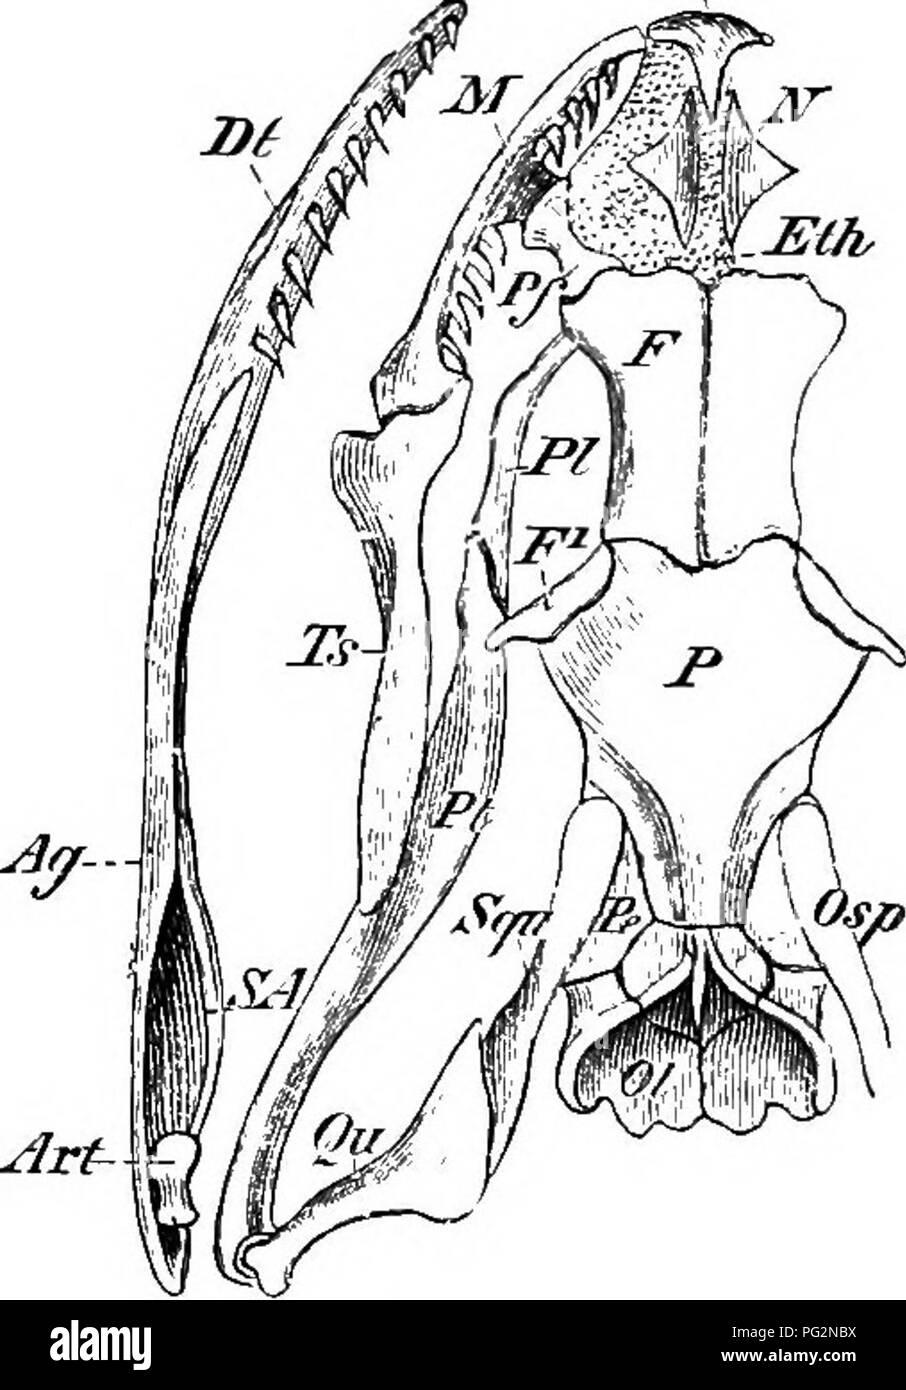 . Elements of the comparative anatomy of vertebrates. Anatomy, Comparative. Pmx â Foi/ Ol COCD (fa. ^rt^ Fig. 72.âSkull of Snake {Tropidonotus natrix), dorsal view. Tig. 73.â ,, ,, ,, ,, ventral view. Cocc, occipital condyle ; Osp, .supraoccipital; 01, exoccipital; Foe, fenestra ovalis ; Pe, periotic ; P, parietal ; F, frontal ; i''^, postfrontal; Pf, prefrontal; Mh, ethmoid ; N, nasal; Pmx, premajcilla; M, maxilla; Bp, basioccipital ; Bs, basisphenoid ; Ch, posterior nostrils; Vo, vomer ; PI, palatine ; Pt, pterygoid; Ts, transverse bone; Qii, quadrate; Squ, squamosal; Art, articular ; Ag, an Stock Photo